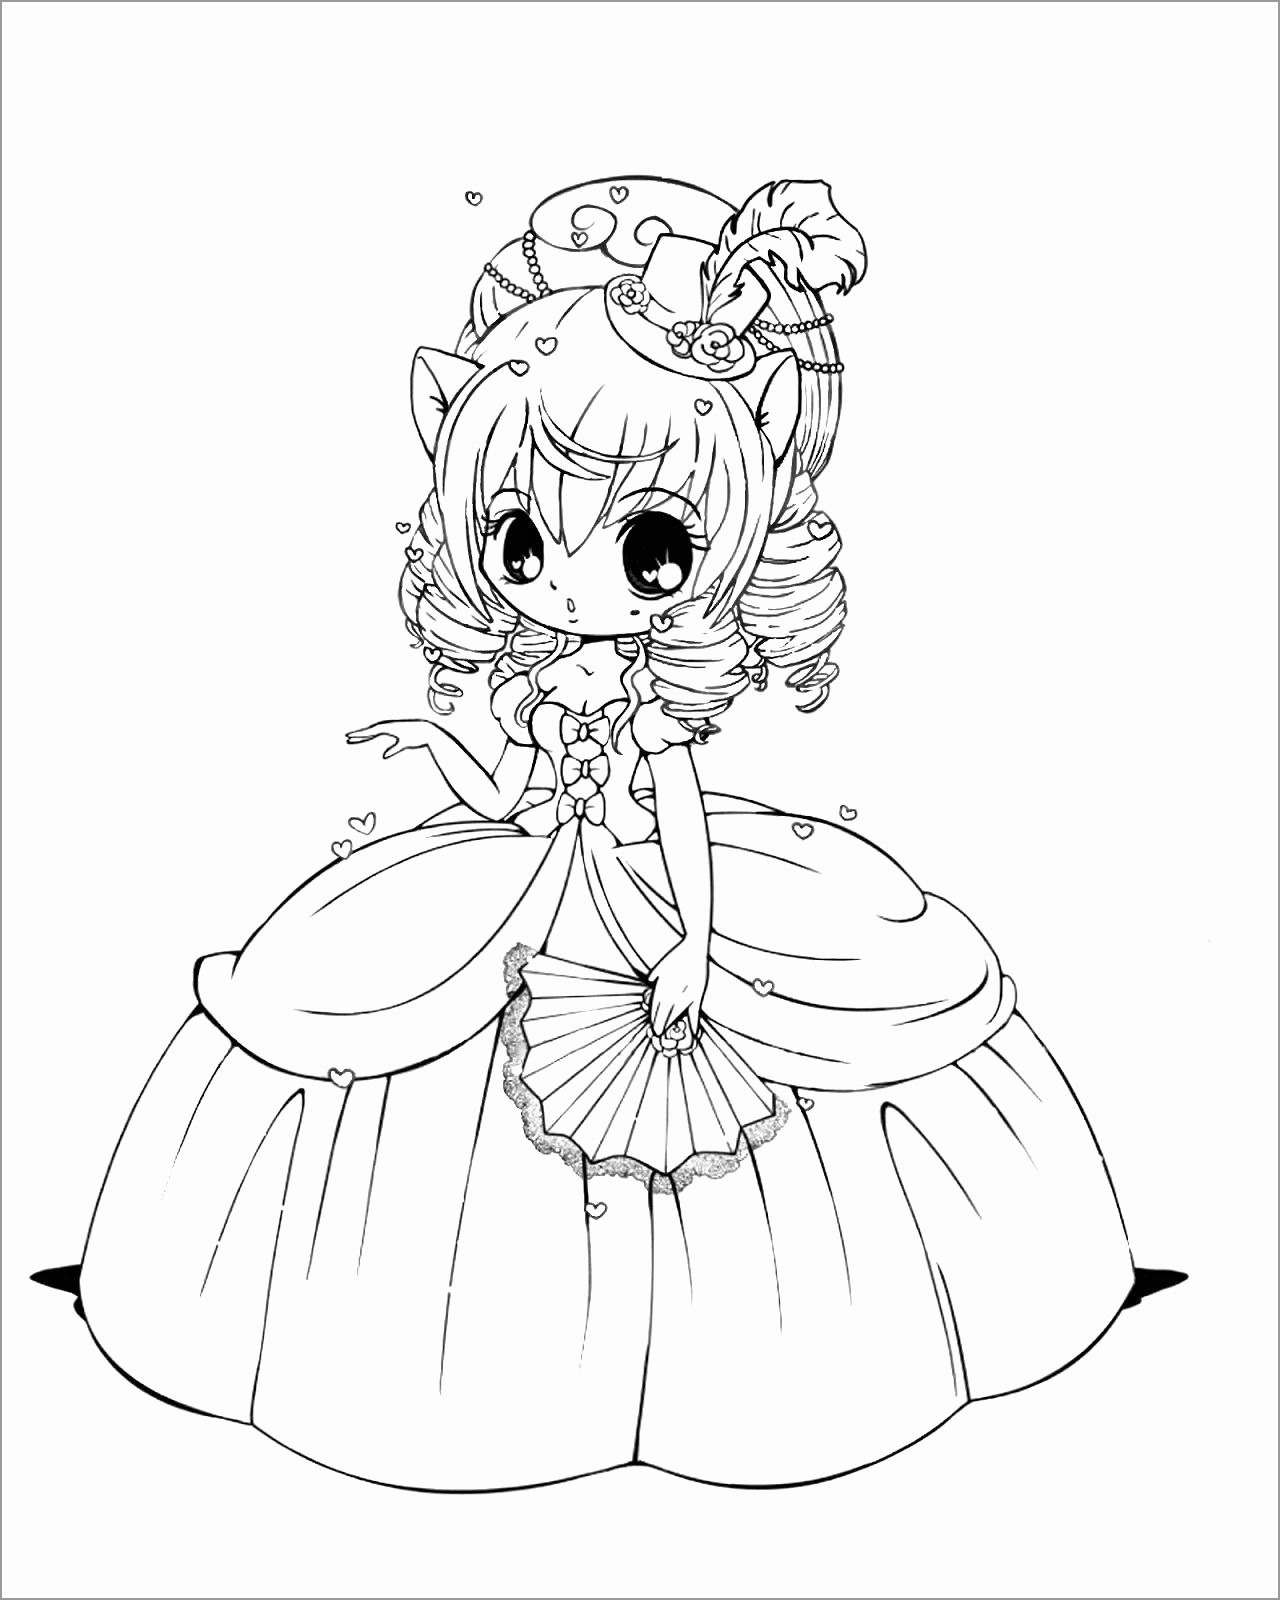 Chibi Kawaii Anime Coloring Page   ColoringBay